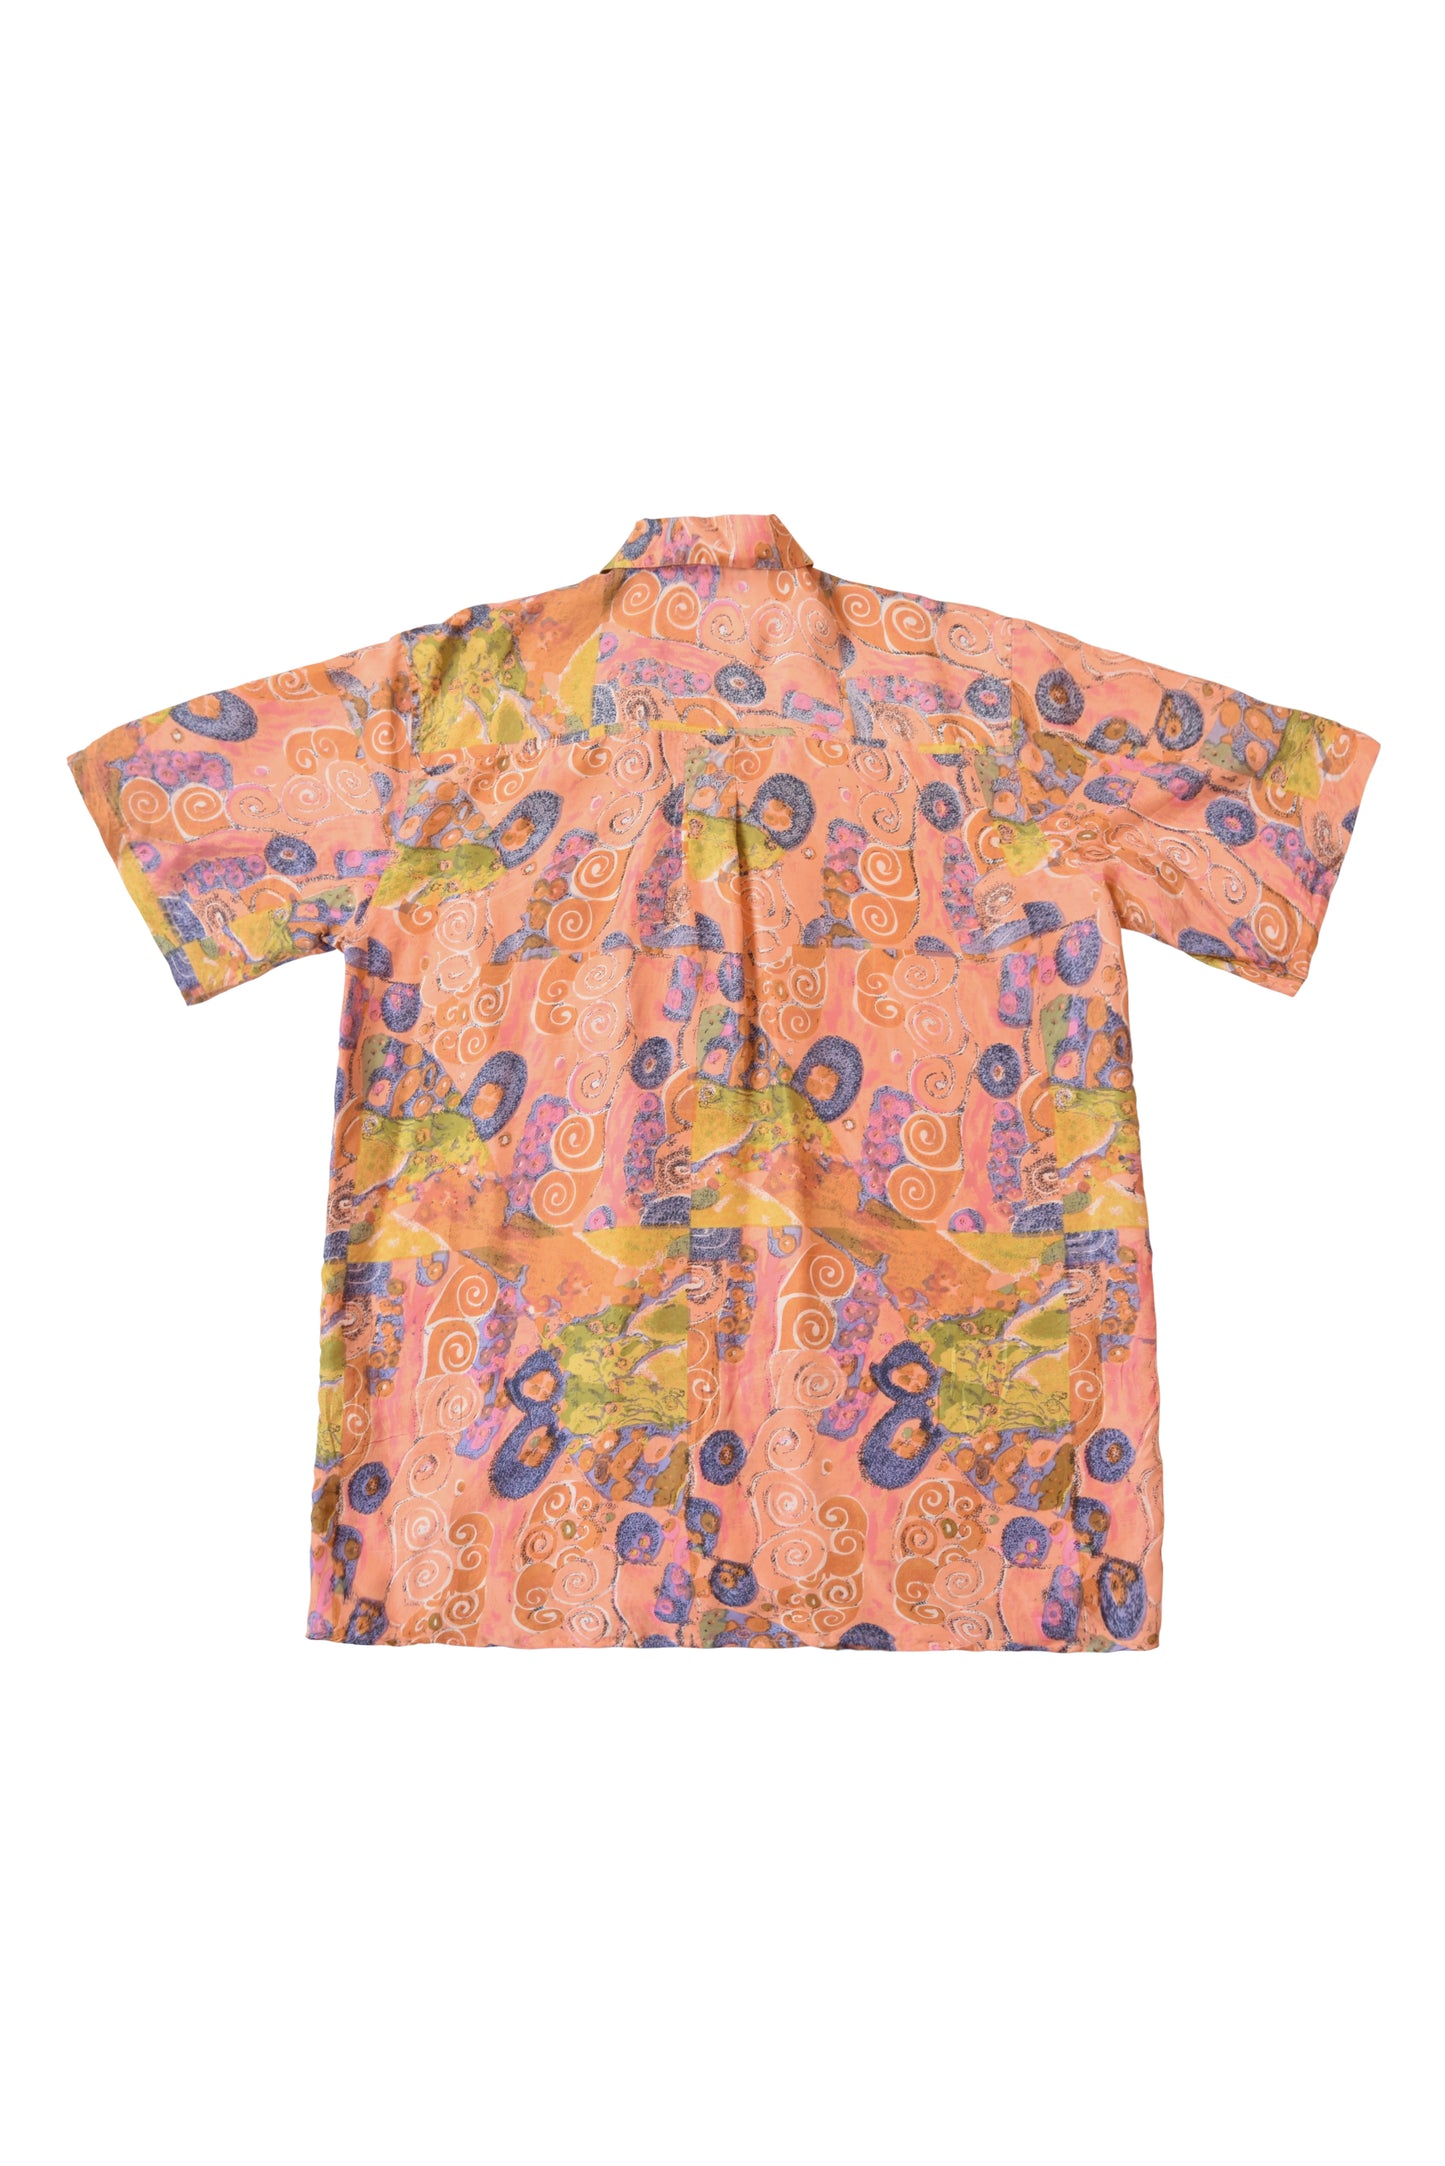 Vintage Silk Festival Shirts Crazy Pattern 